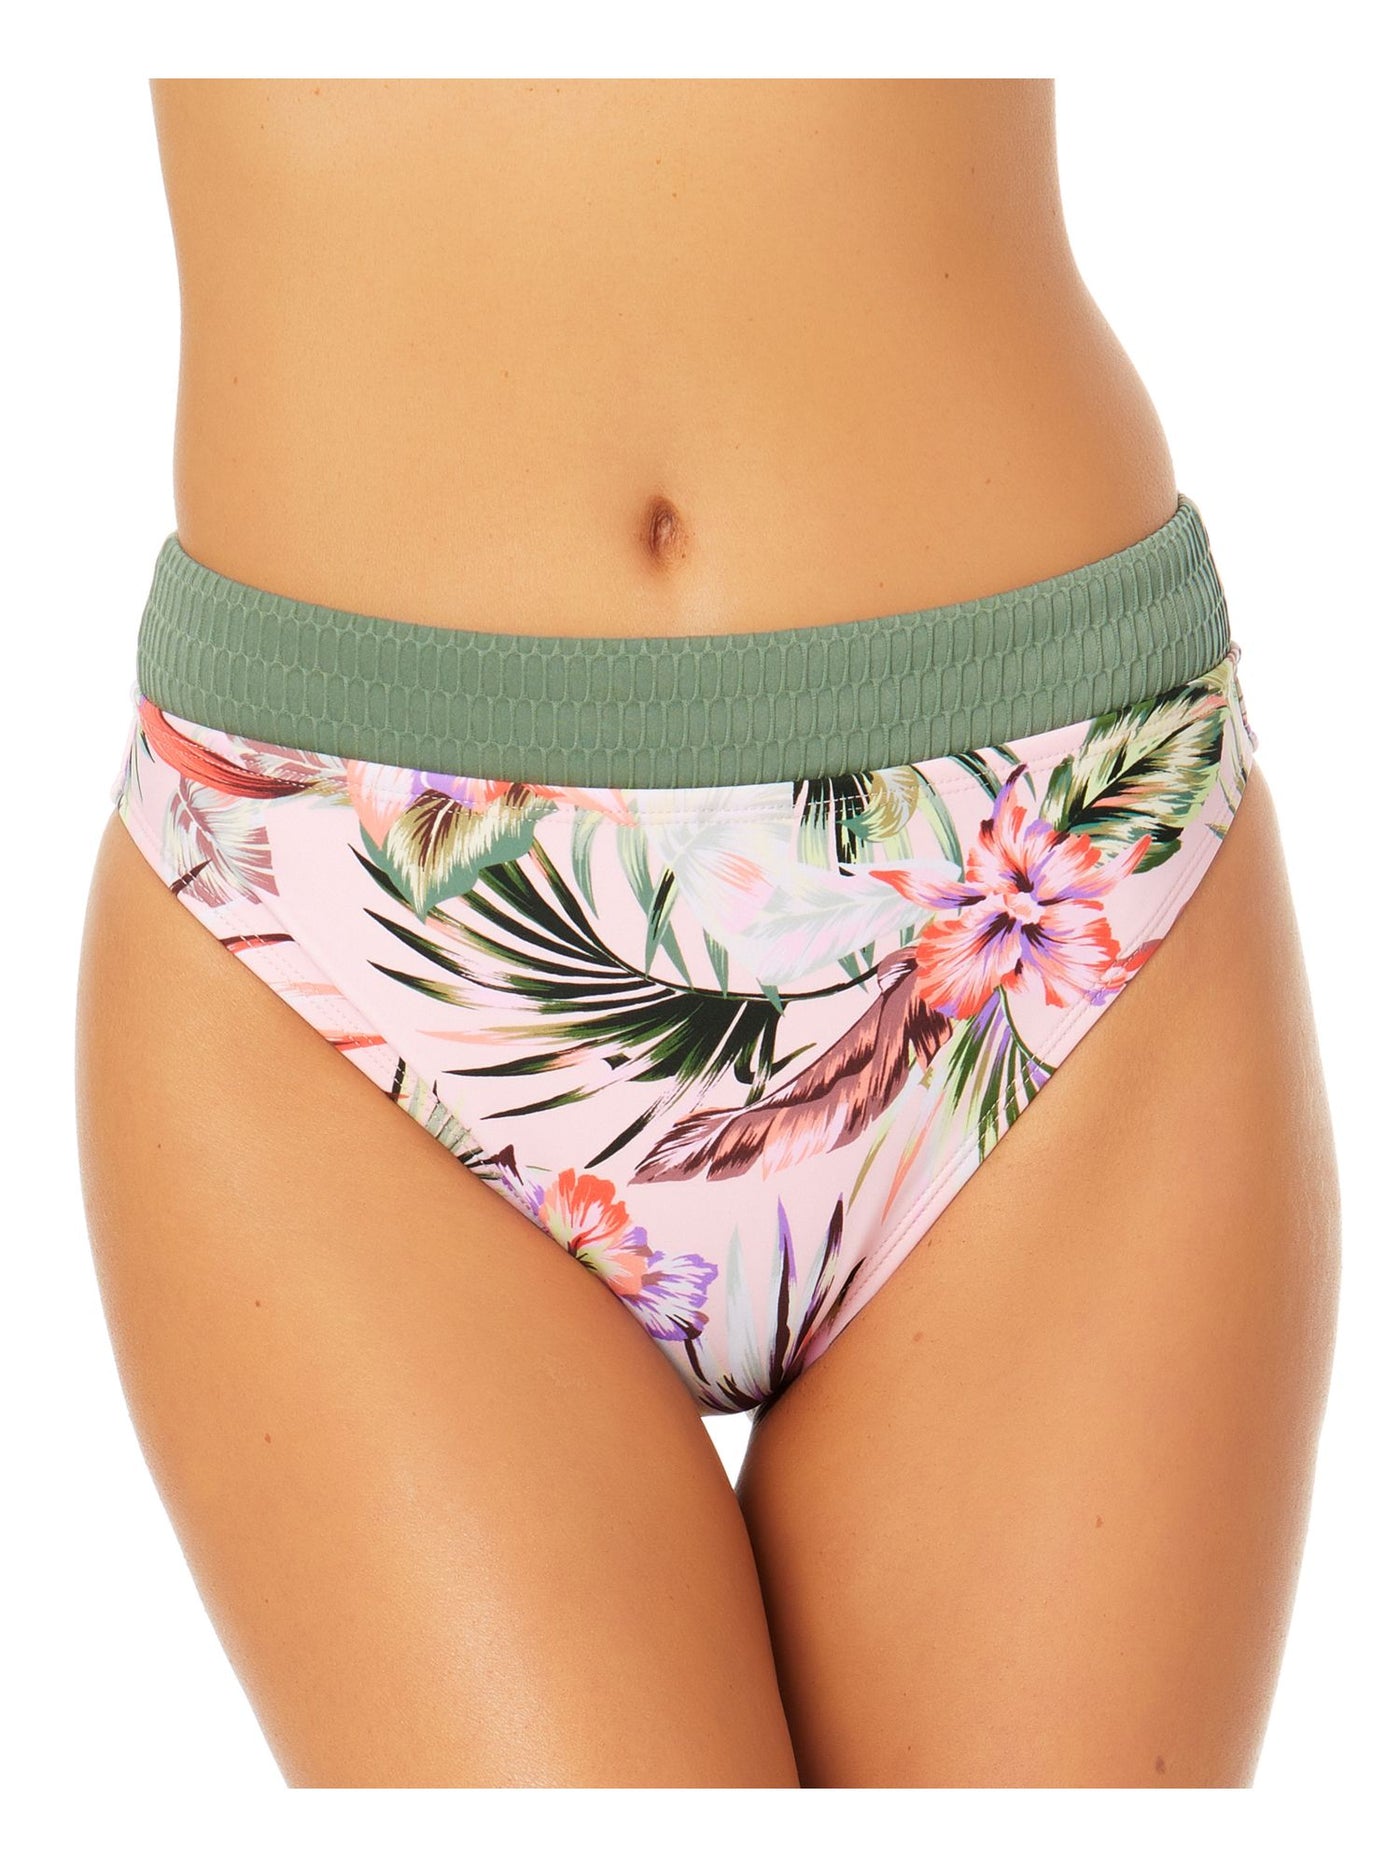 CALIFORNIA SUNSHINE Women's Pink Tropical Print Textured Lined Moderate Coverage Textured Bikini Swimsuit Bottom S